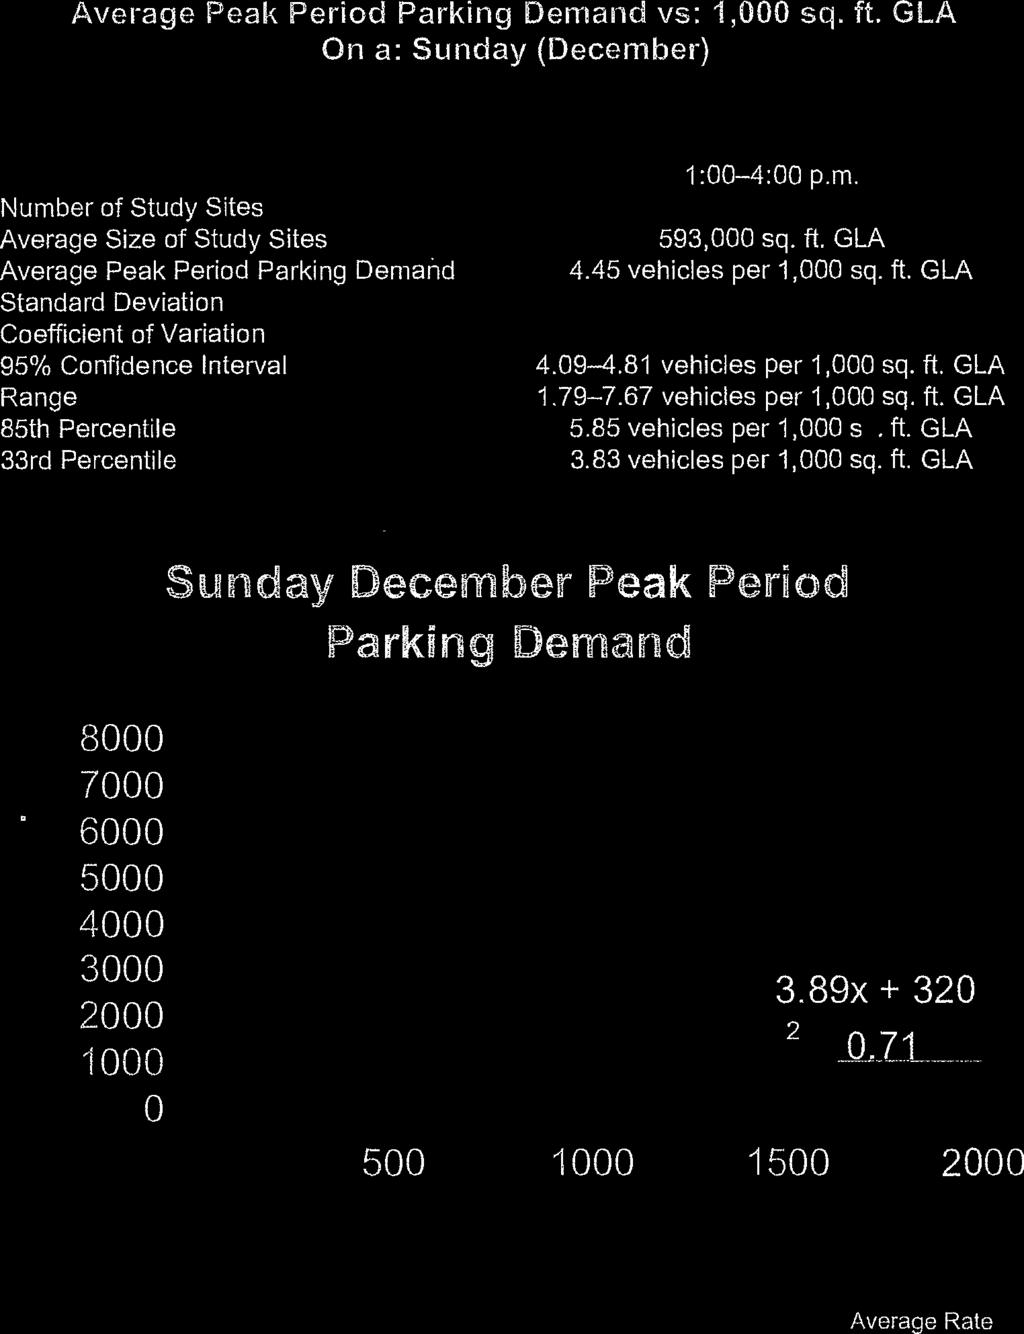 79-7.67 vehicles per 1, sq. ft. GLA 85th Percentile 5.85 vehicles per 1, so ft. GLA 33rd Percentile 3.83 vehicles per 1, sq. ft. GLA Sunday December Peak Period Parking Demand P = Parked Vehicles 8 7 6 5 4 3 2 1 - P = 3.